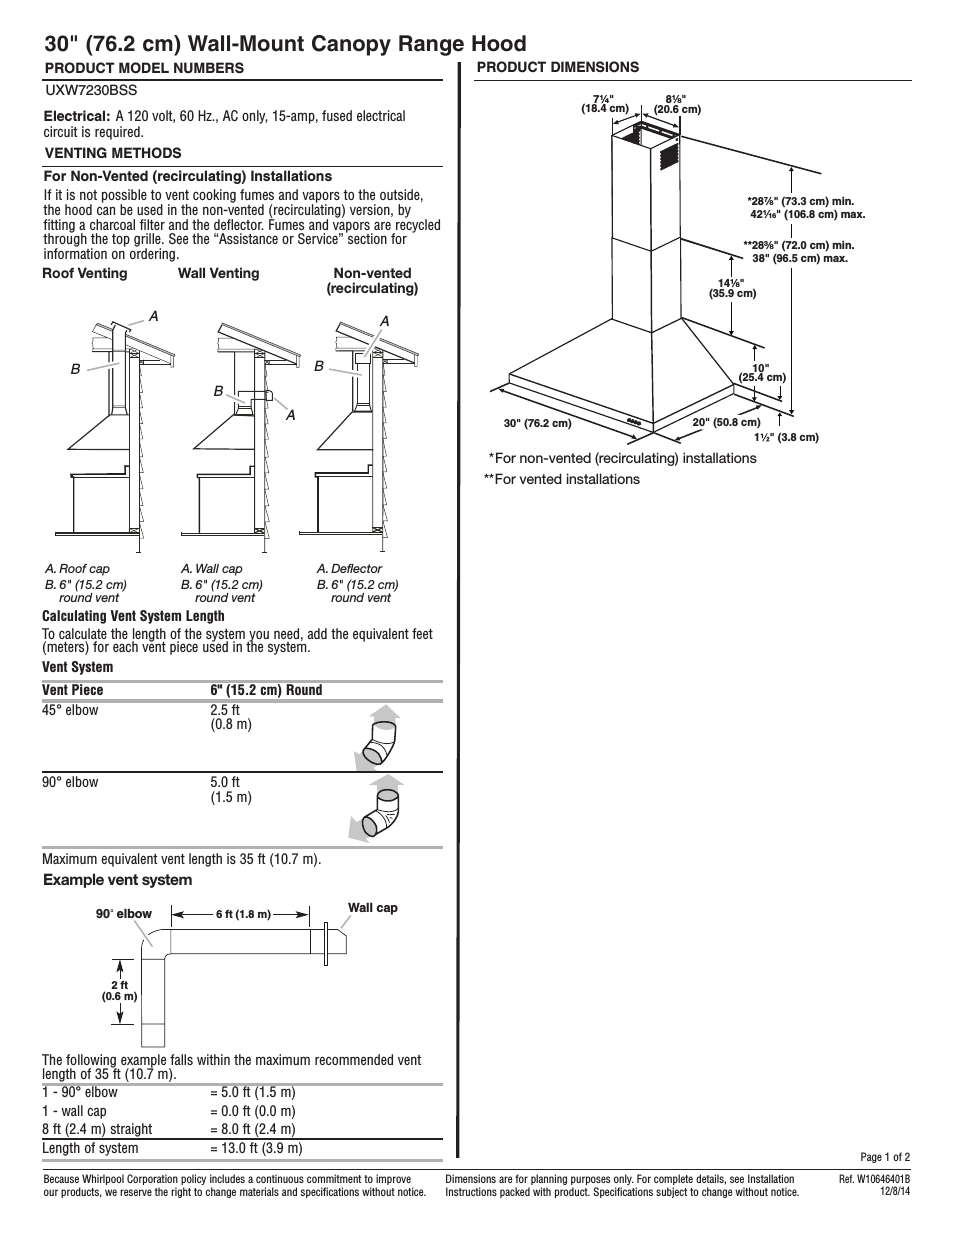 UXW7230BSS Dimension Guide